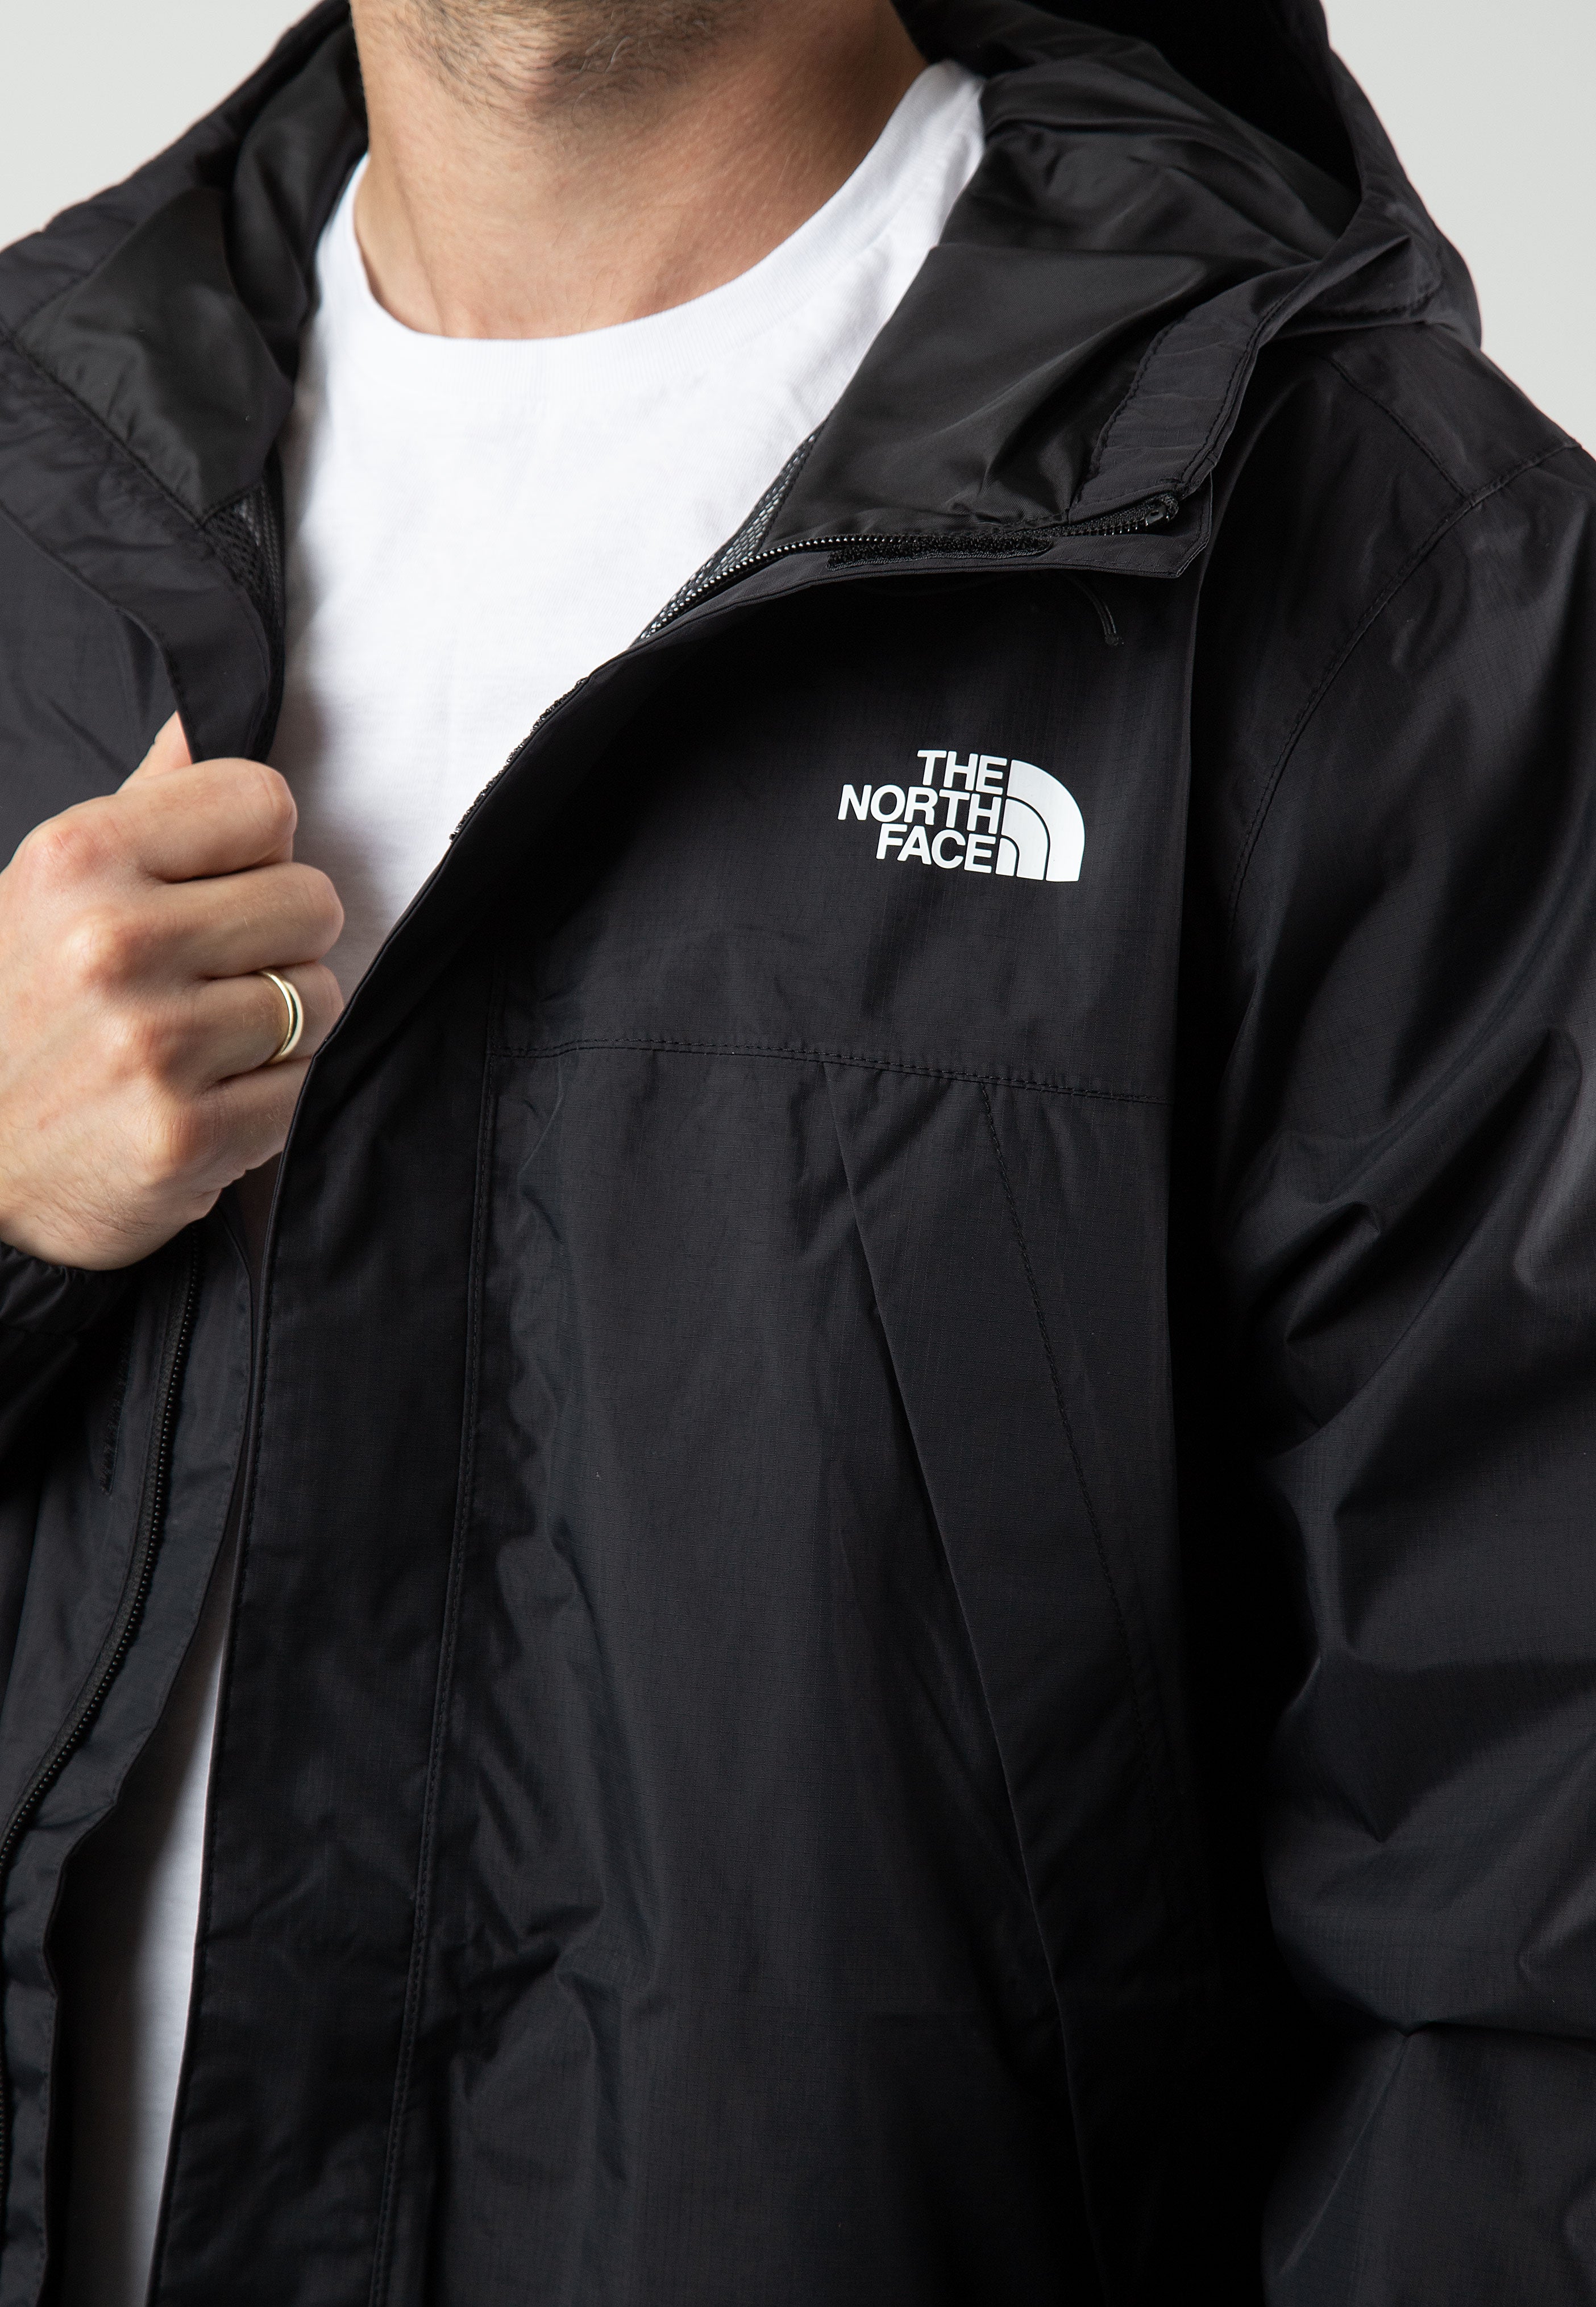 The North Face - Antora Tnf Black - Jacket